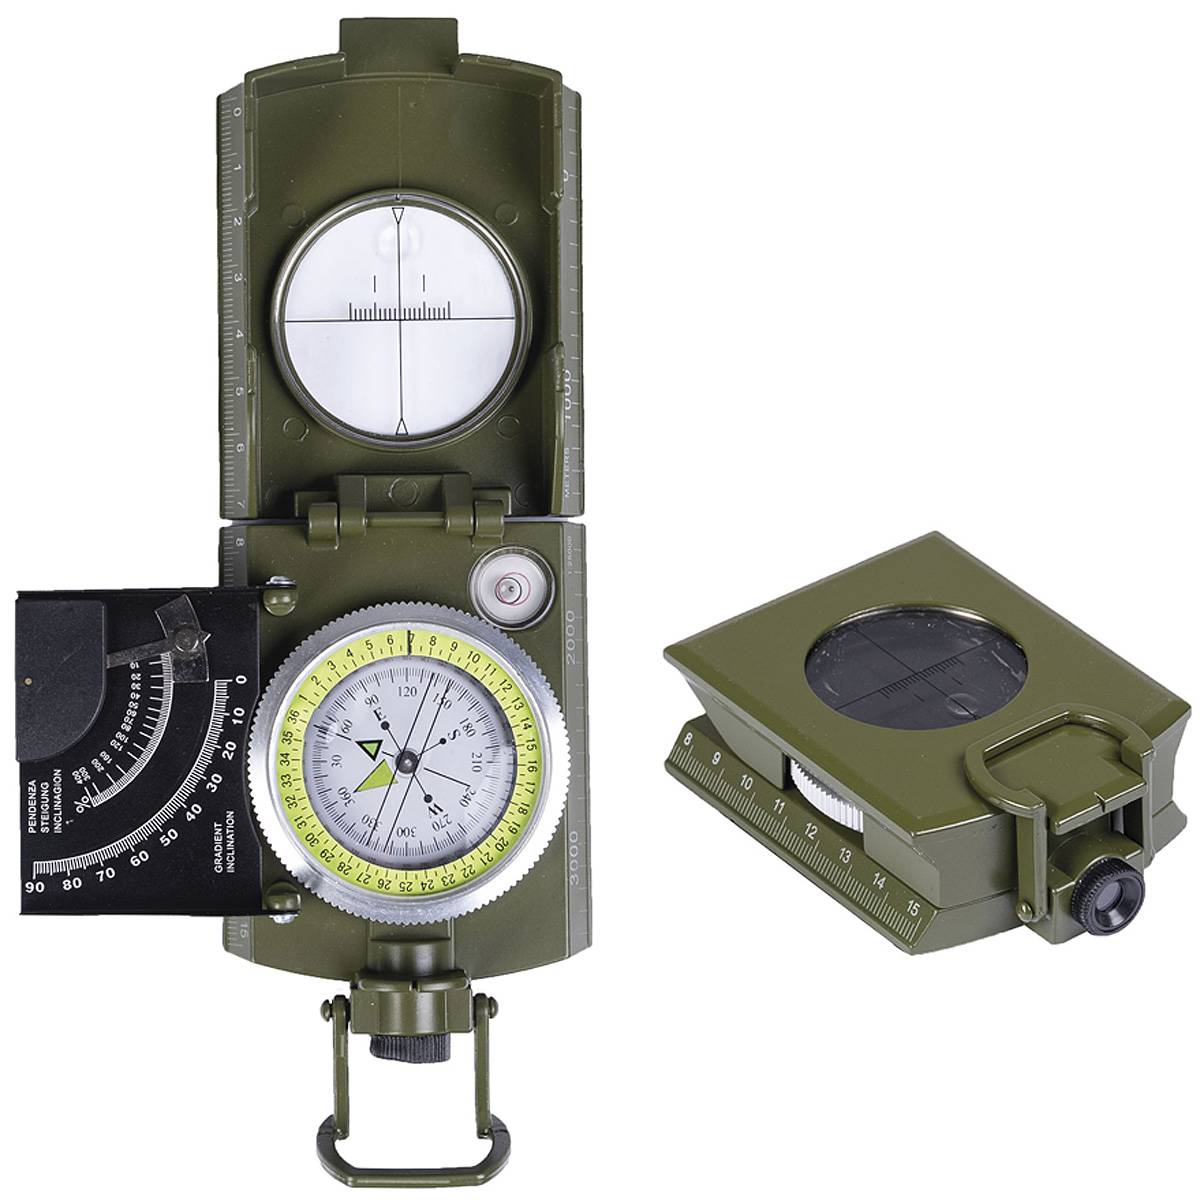 Kompass Marschkompass Metallgehäuse BW Bundeswehr Armeekompass mit Etui Oliv 